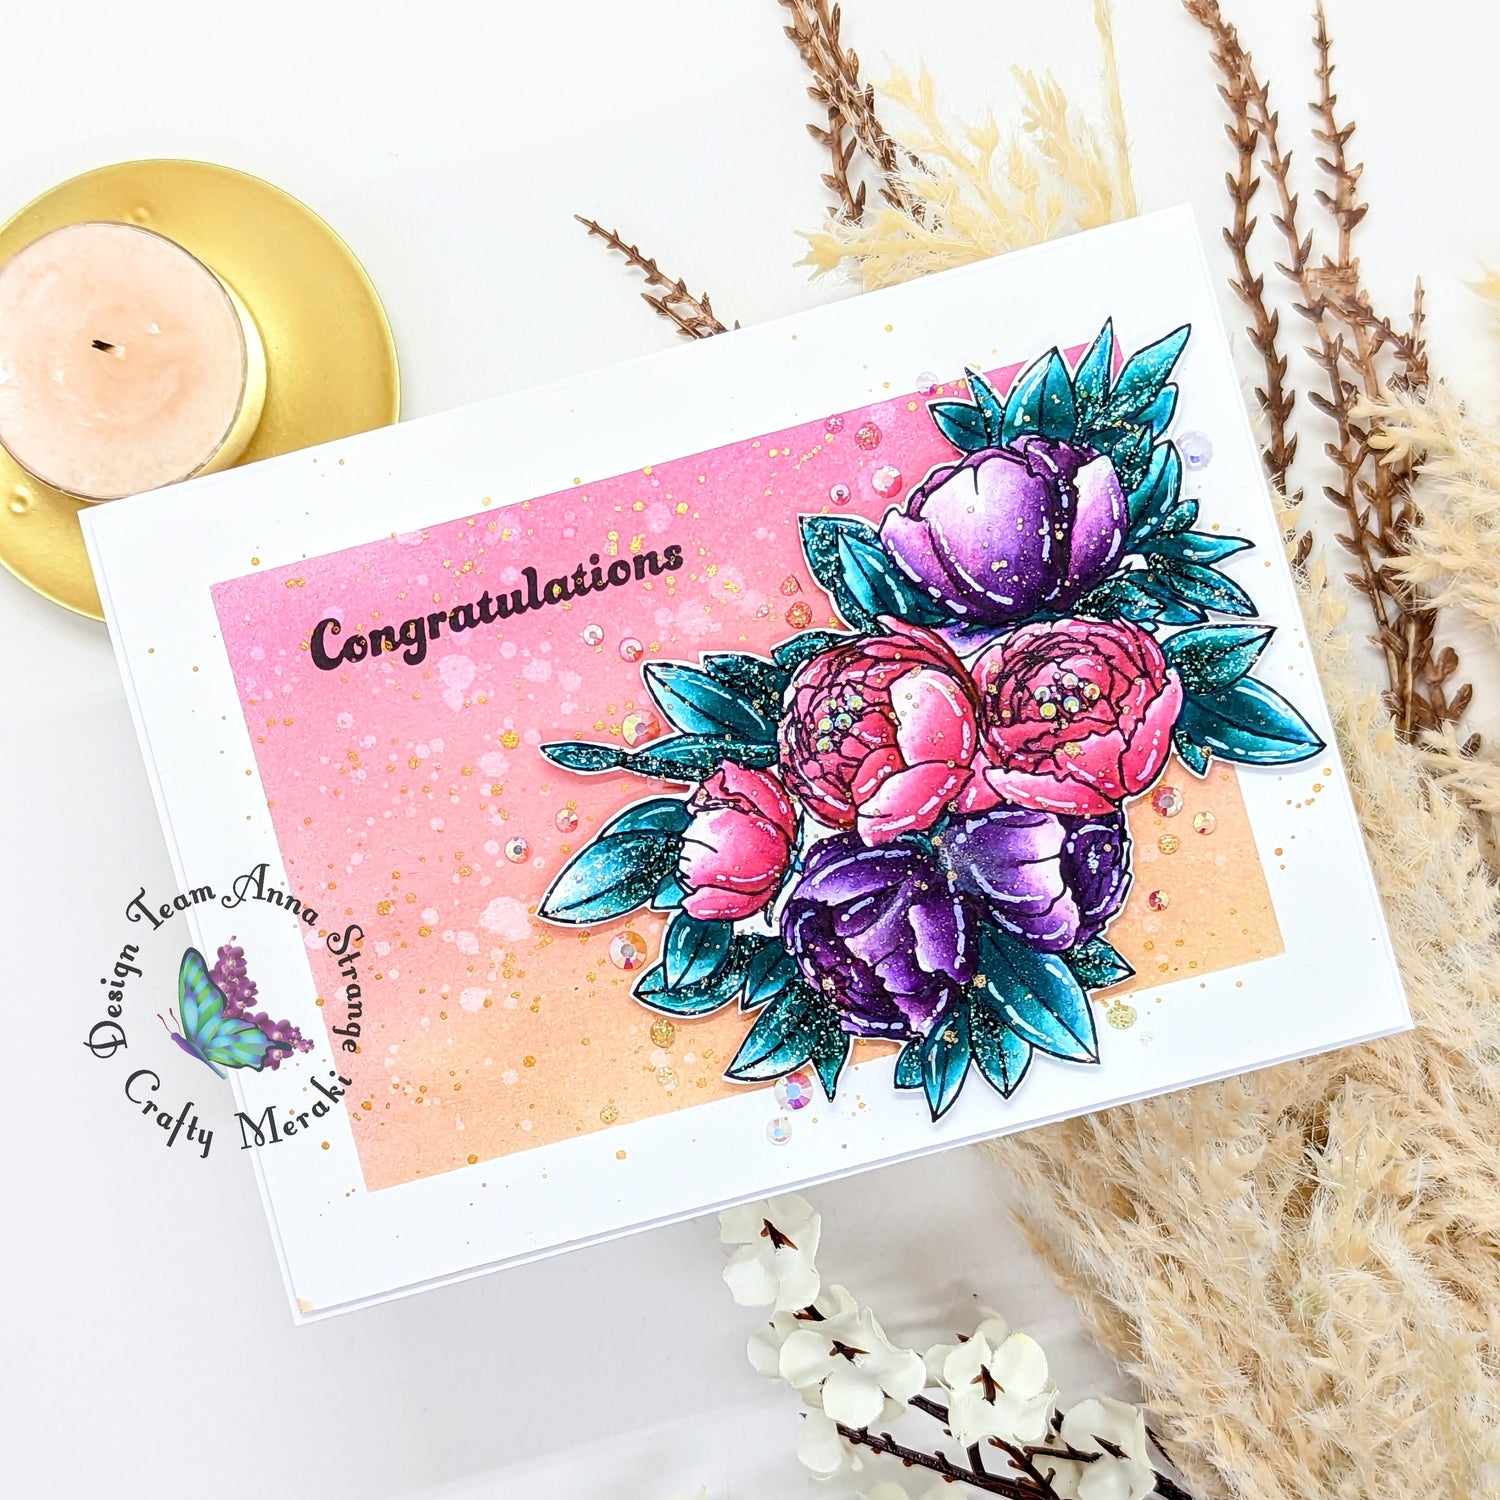 Congratulations card by Anna